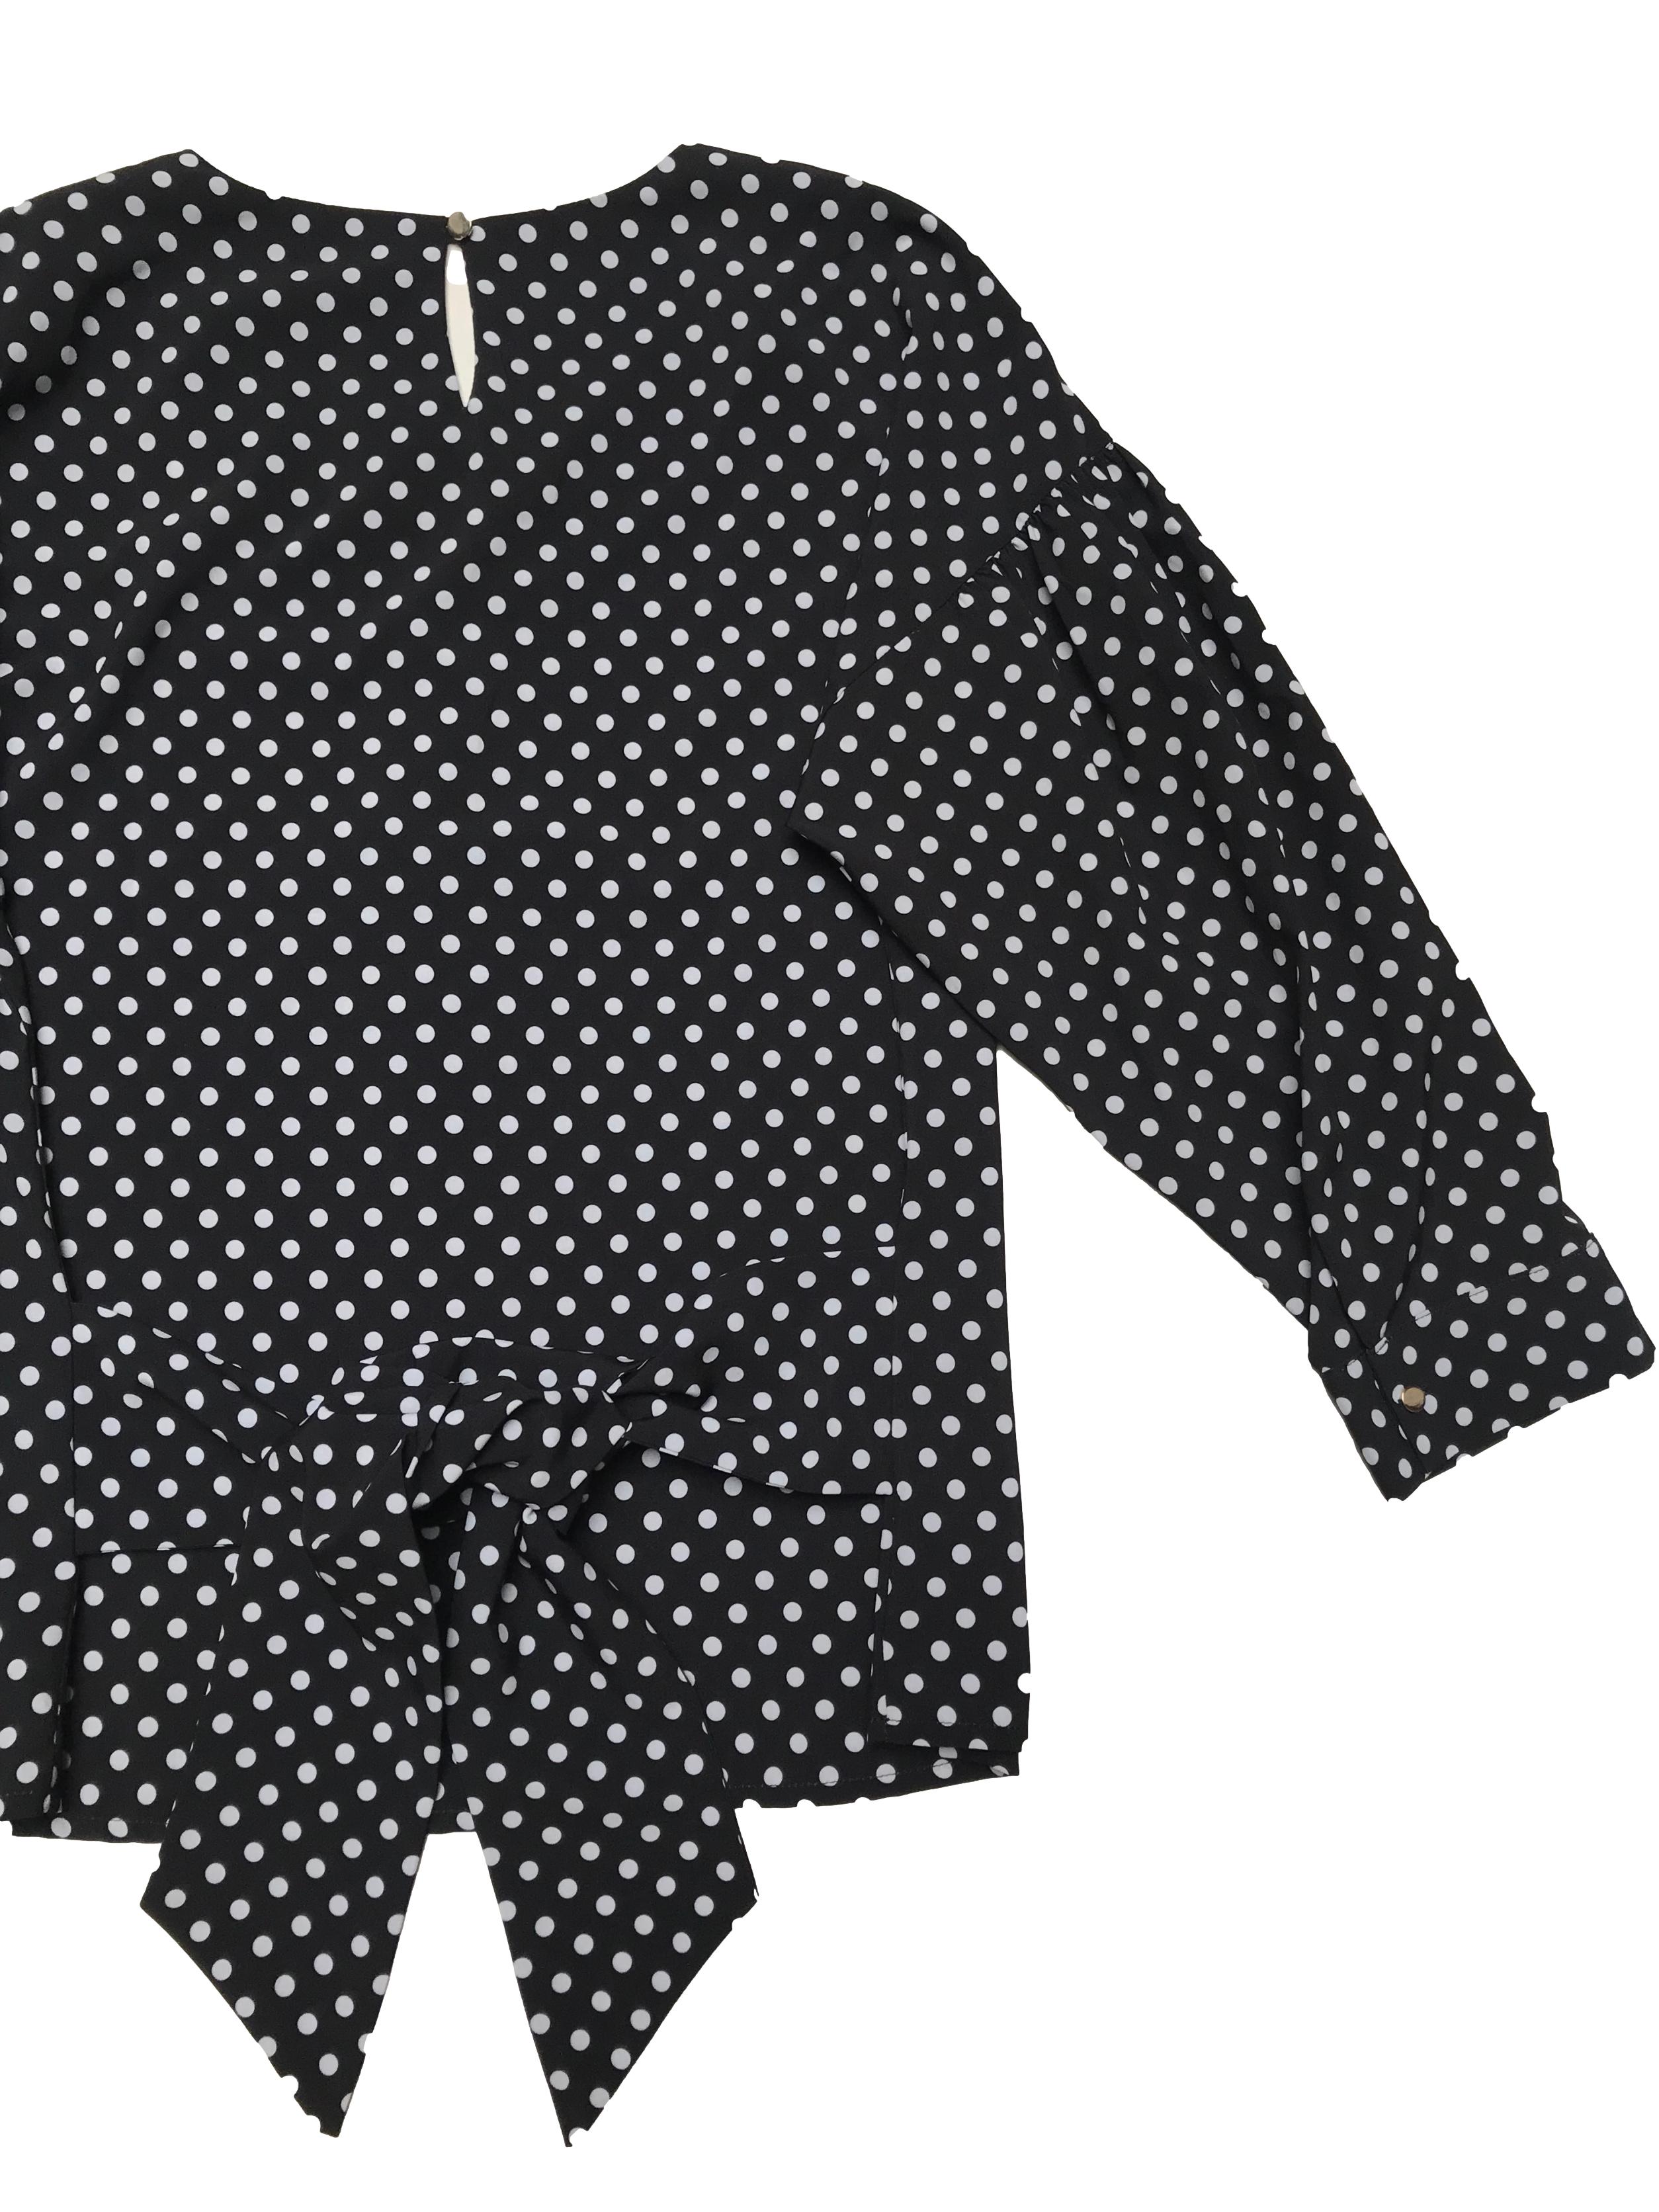 Blusa Mentha&chocolate negra con lunares blancos, botón posterior en el cuello, cinto para amarrar atrás, mangas 3/4 con volumen. Busto 100cm Largo 55cm. 